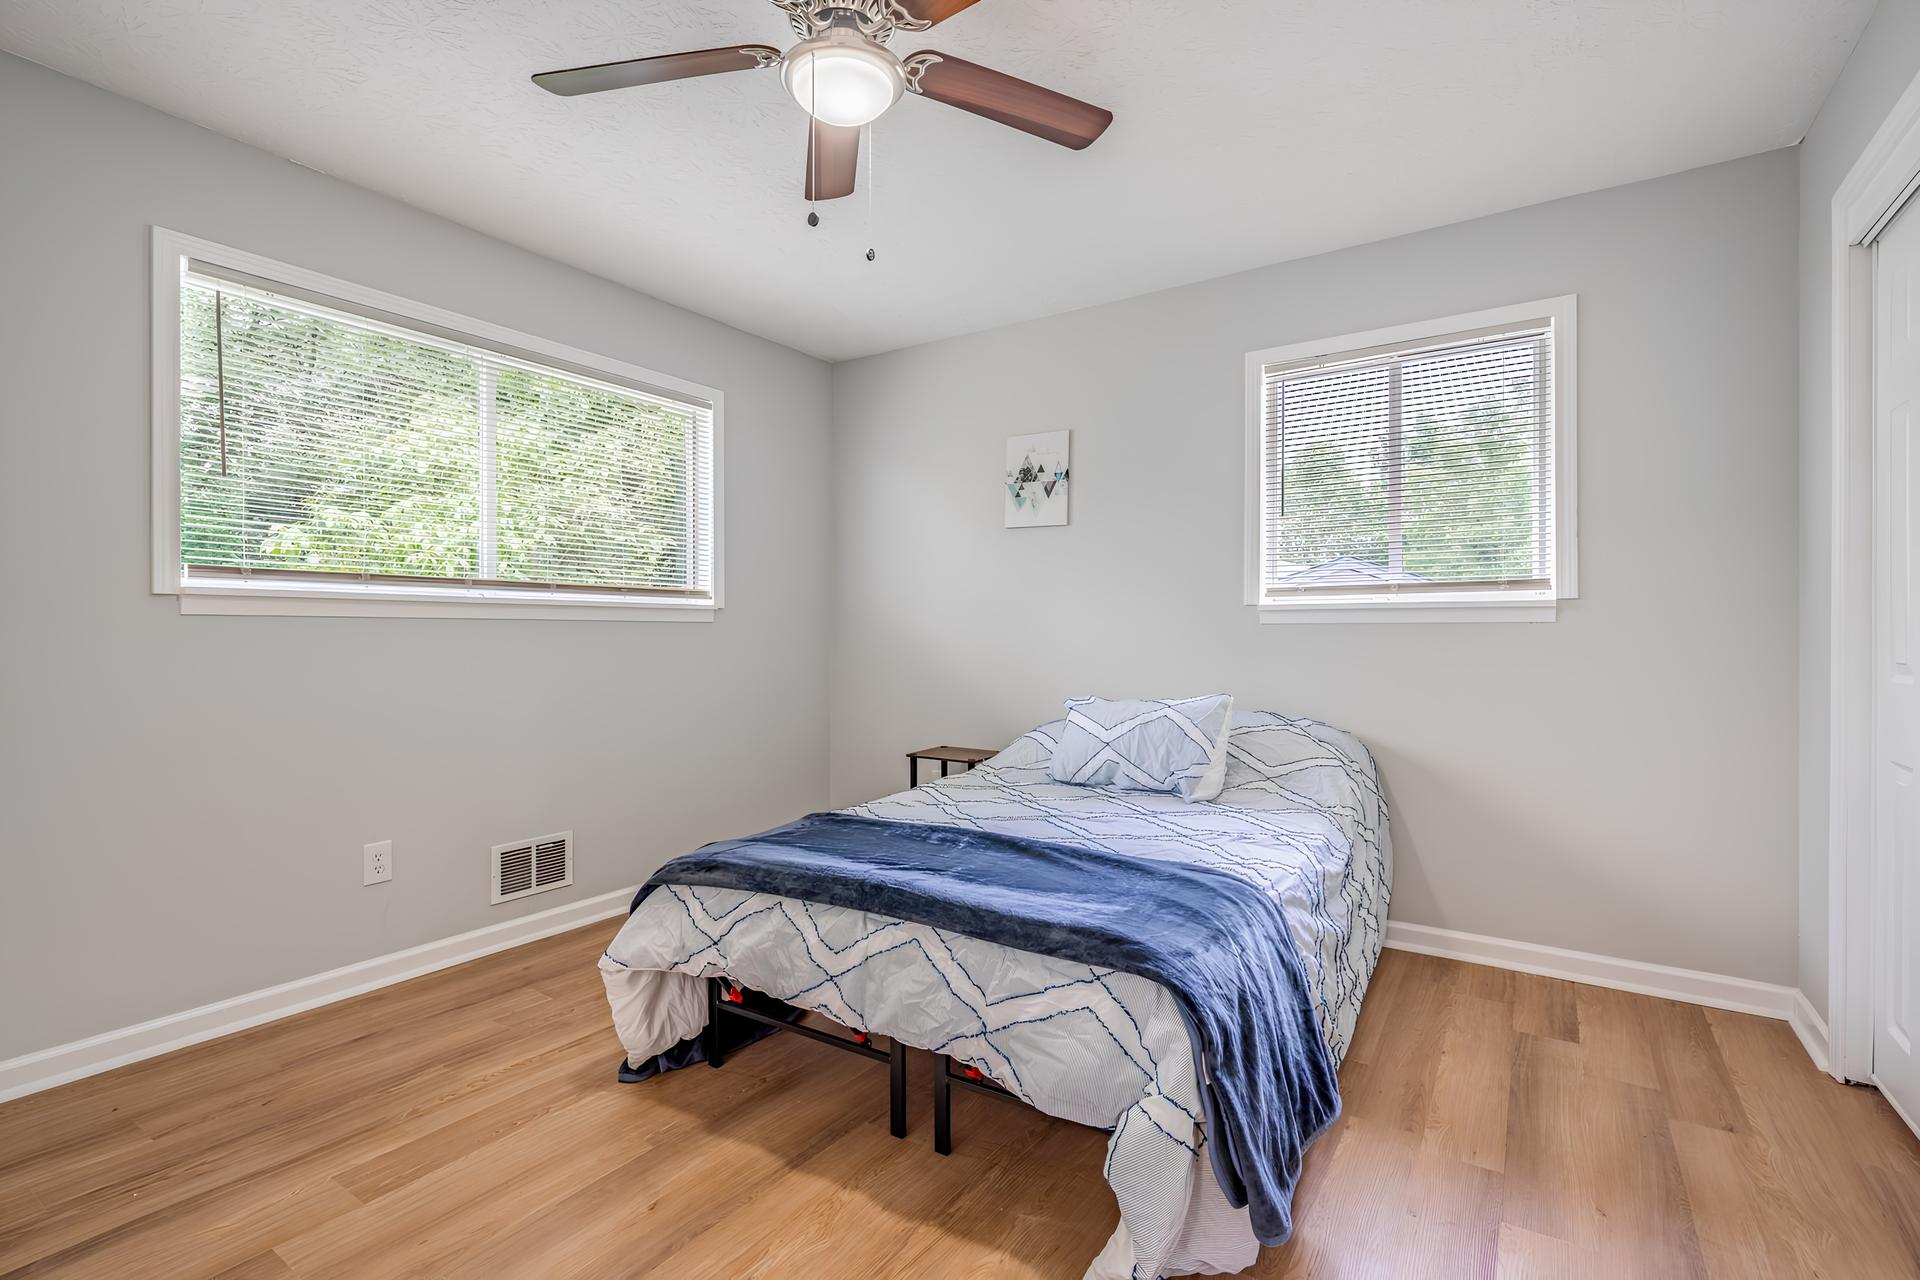 bedroom, detected:ceiling fan, window blind